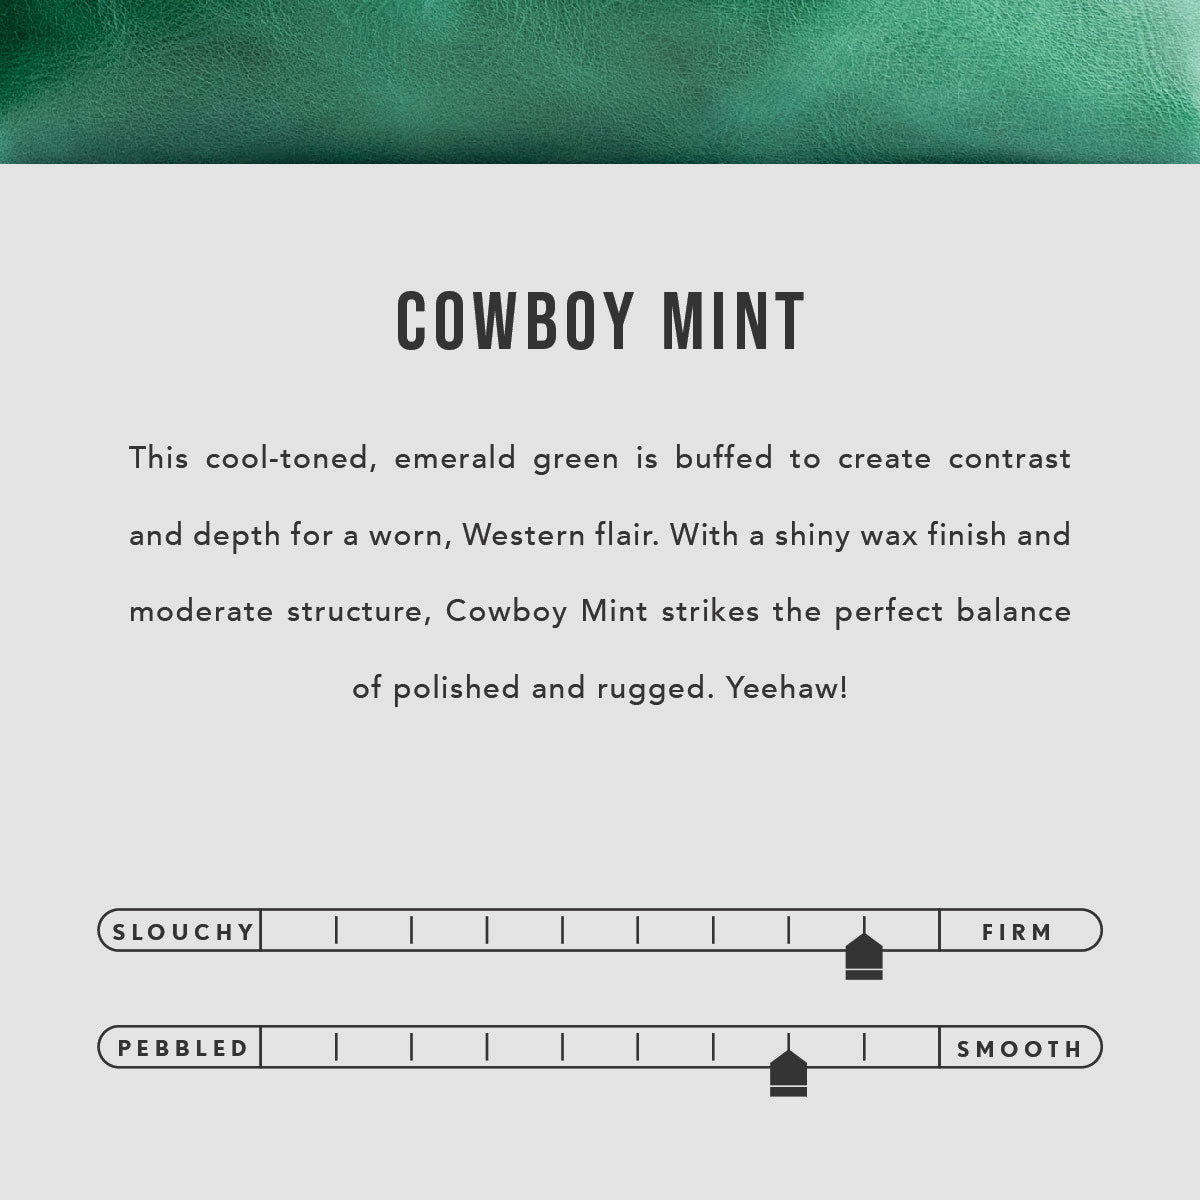 Cowboy Mint*Classic | infographic